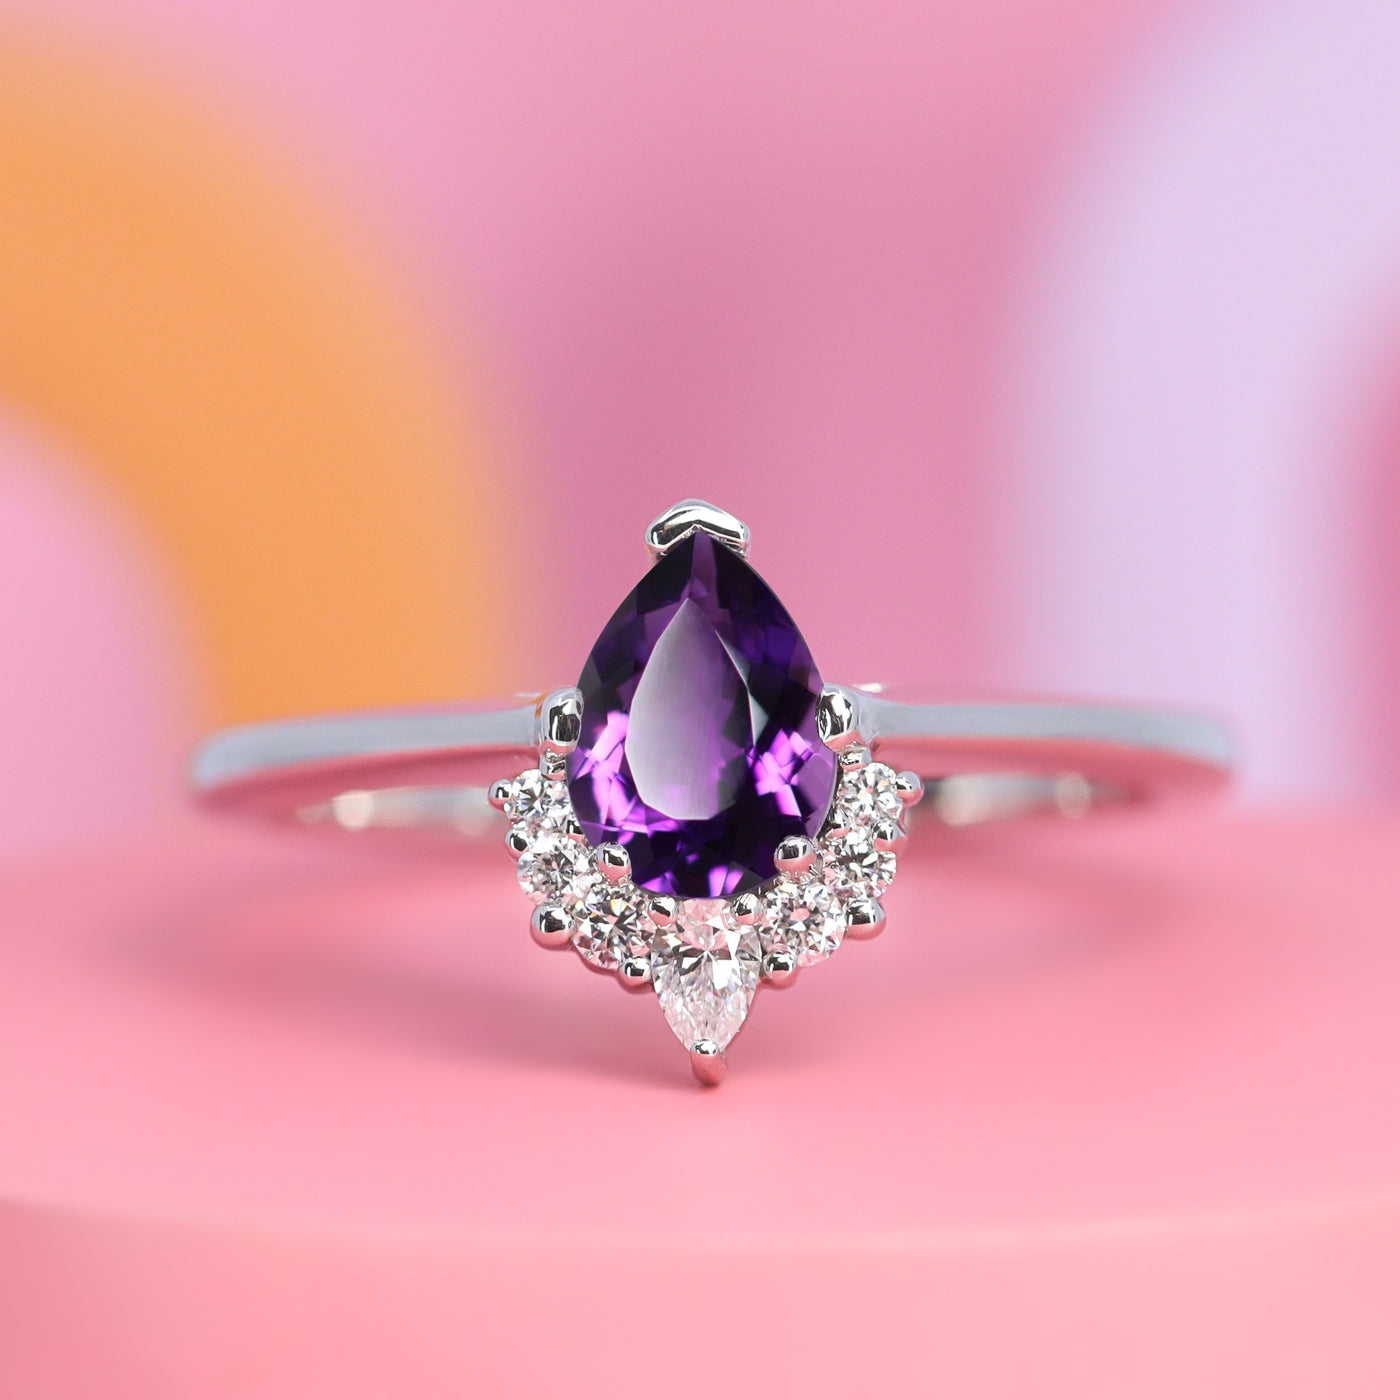 Celeste - Teardrop/Pear Cut Amethyst or Sapphire Ring with White Diamond Crown - Ready in 6 Weeks